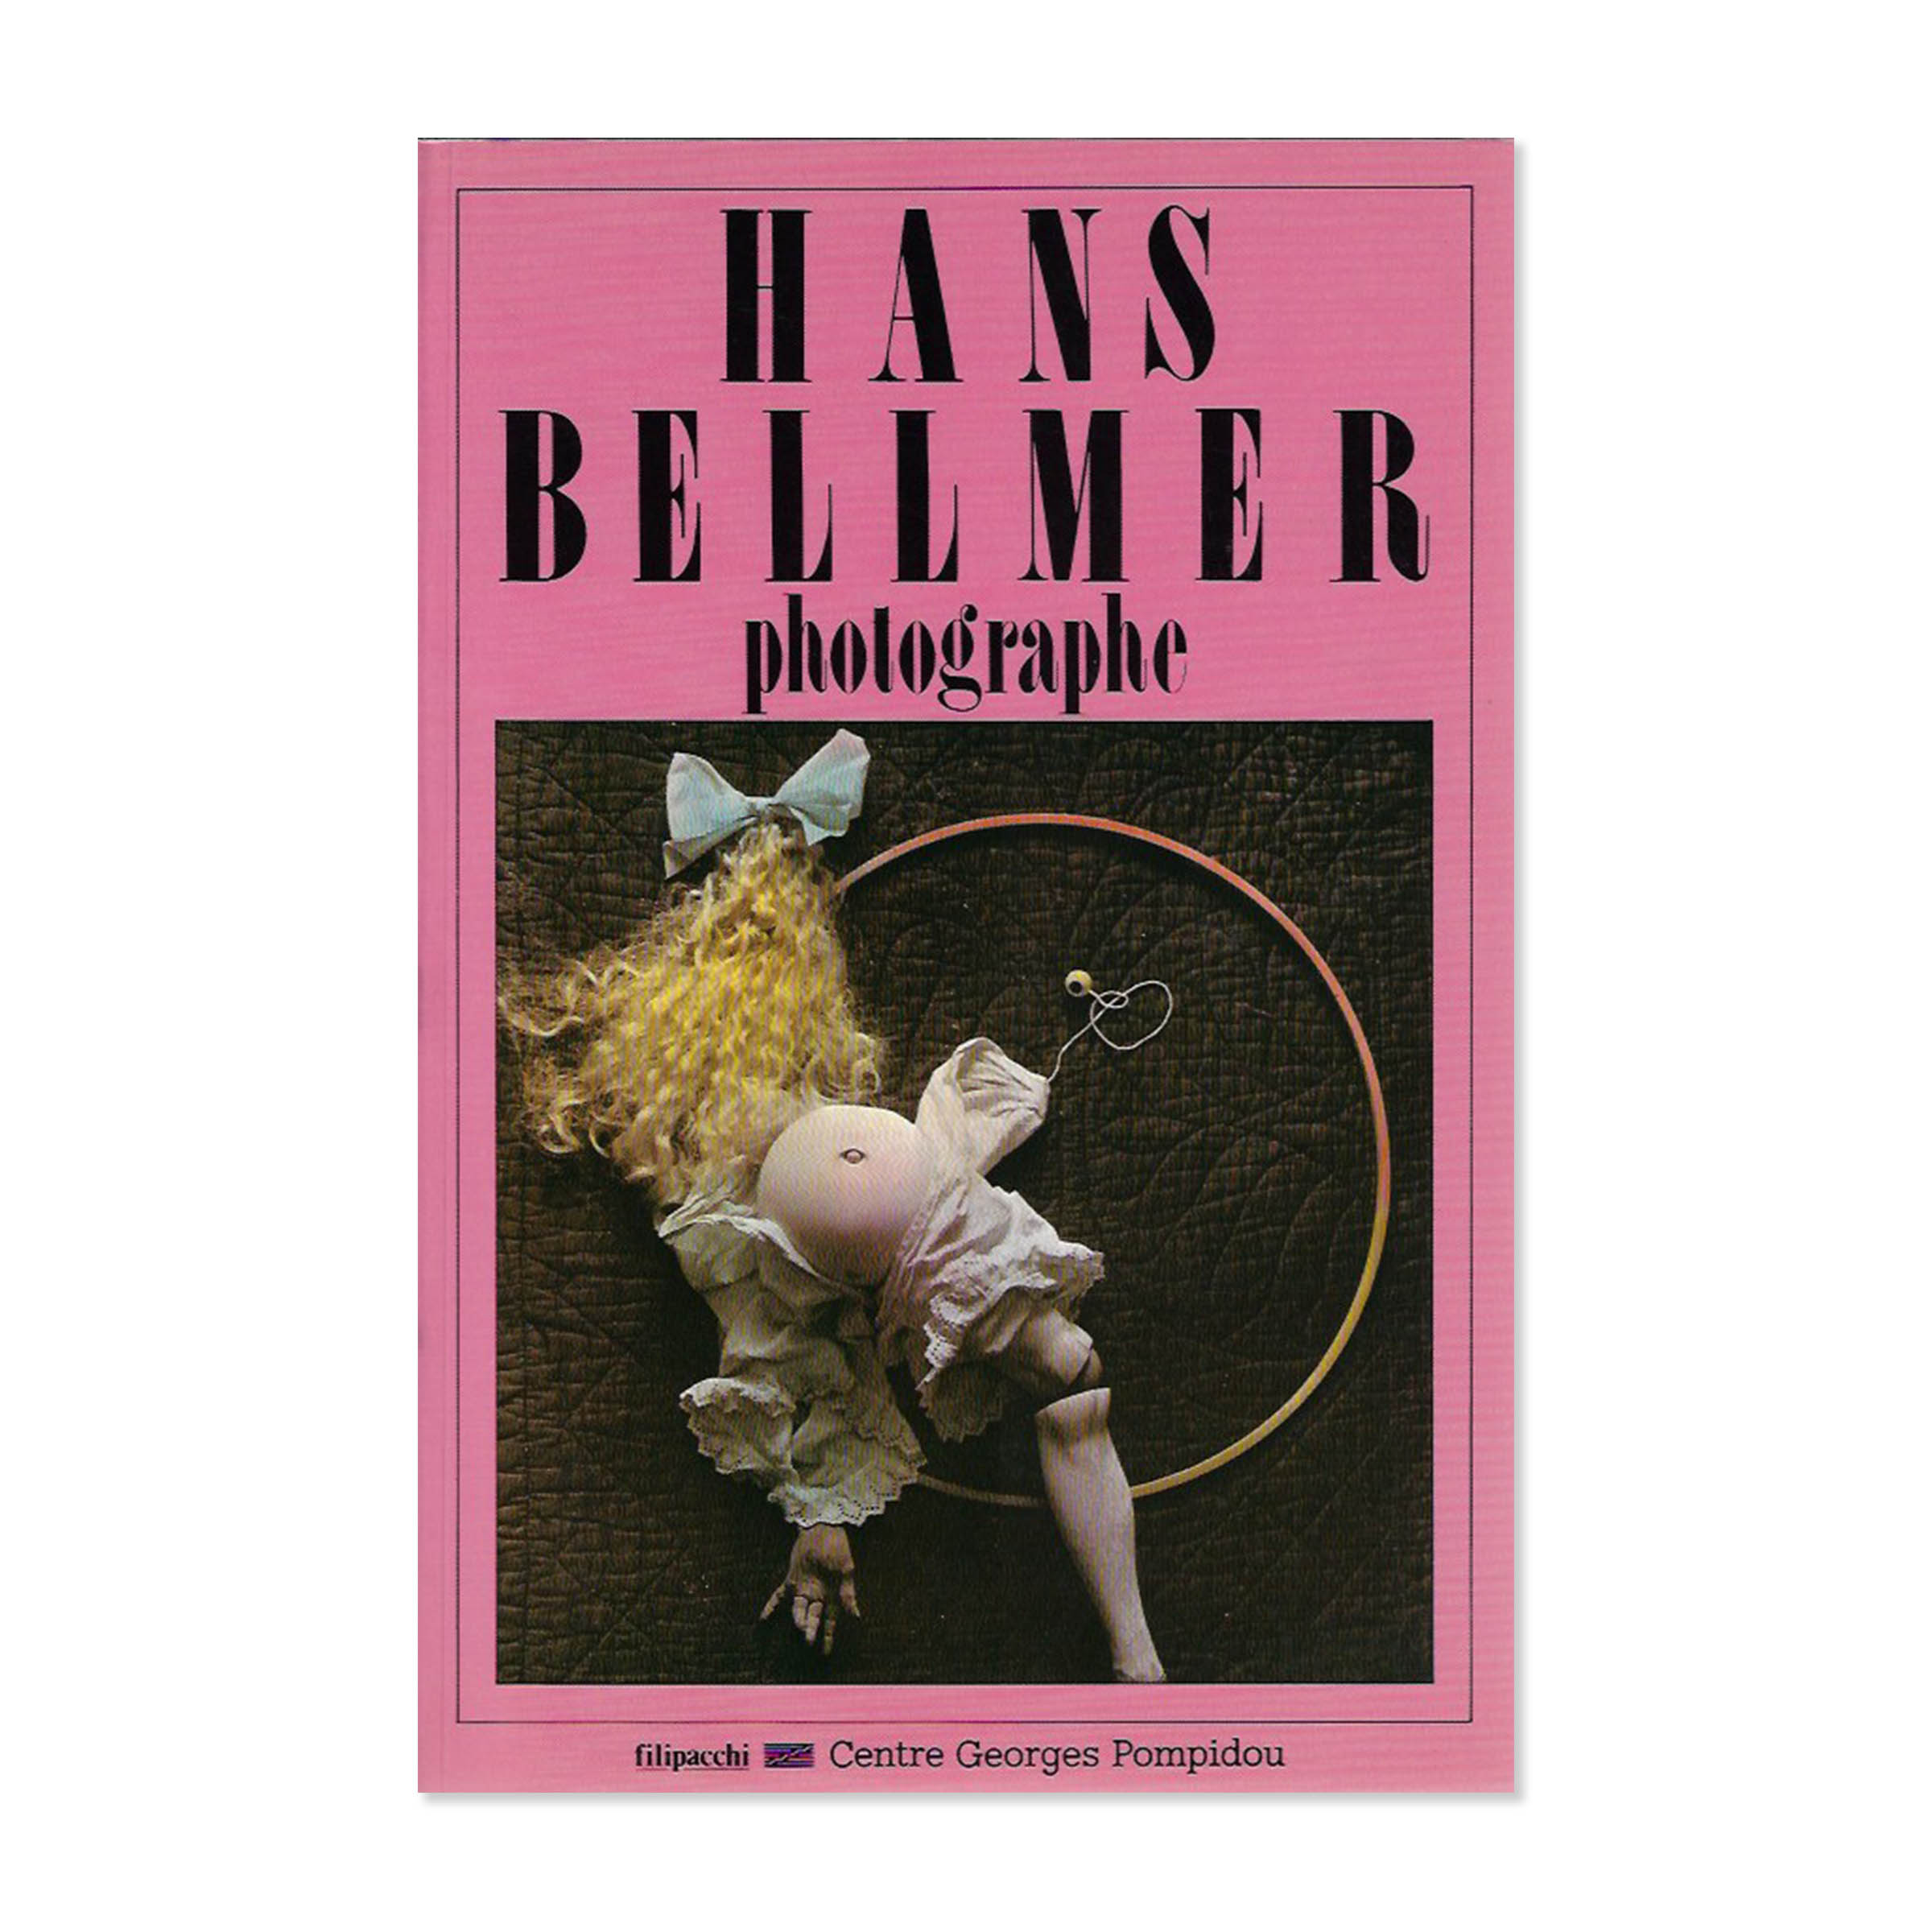 Hans Bellmer. Photographe. Cover view